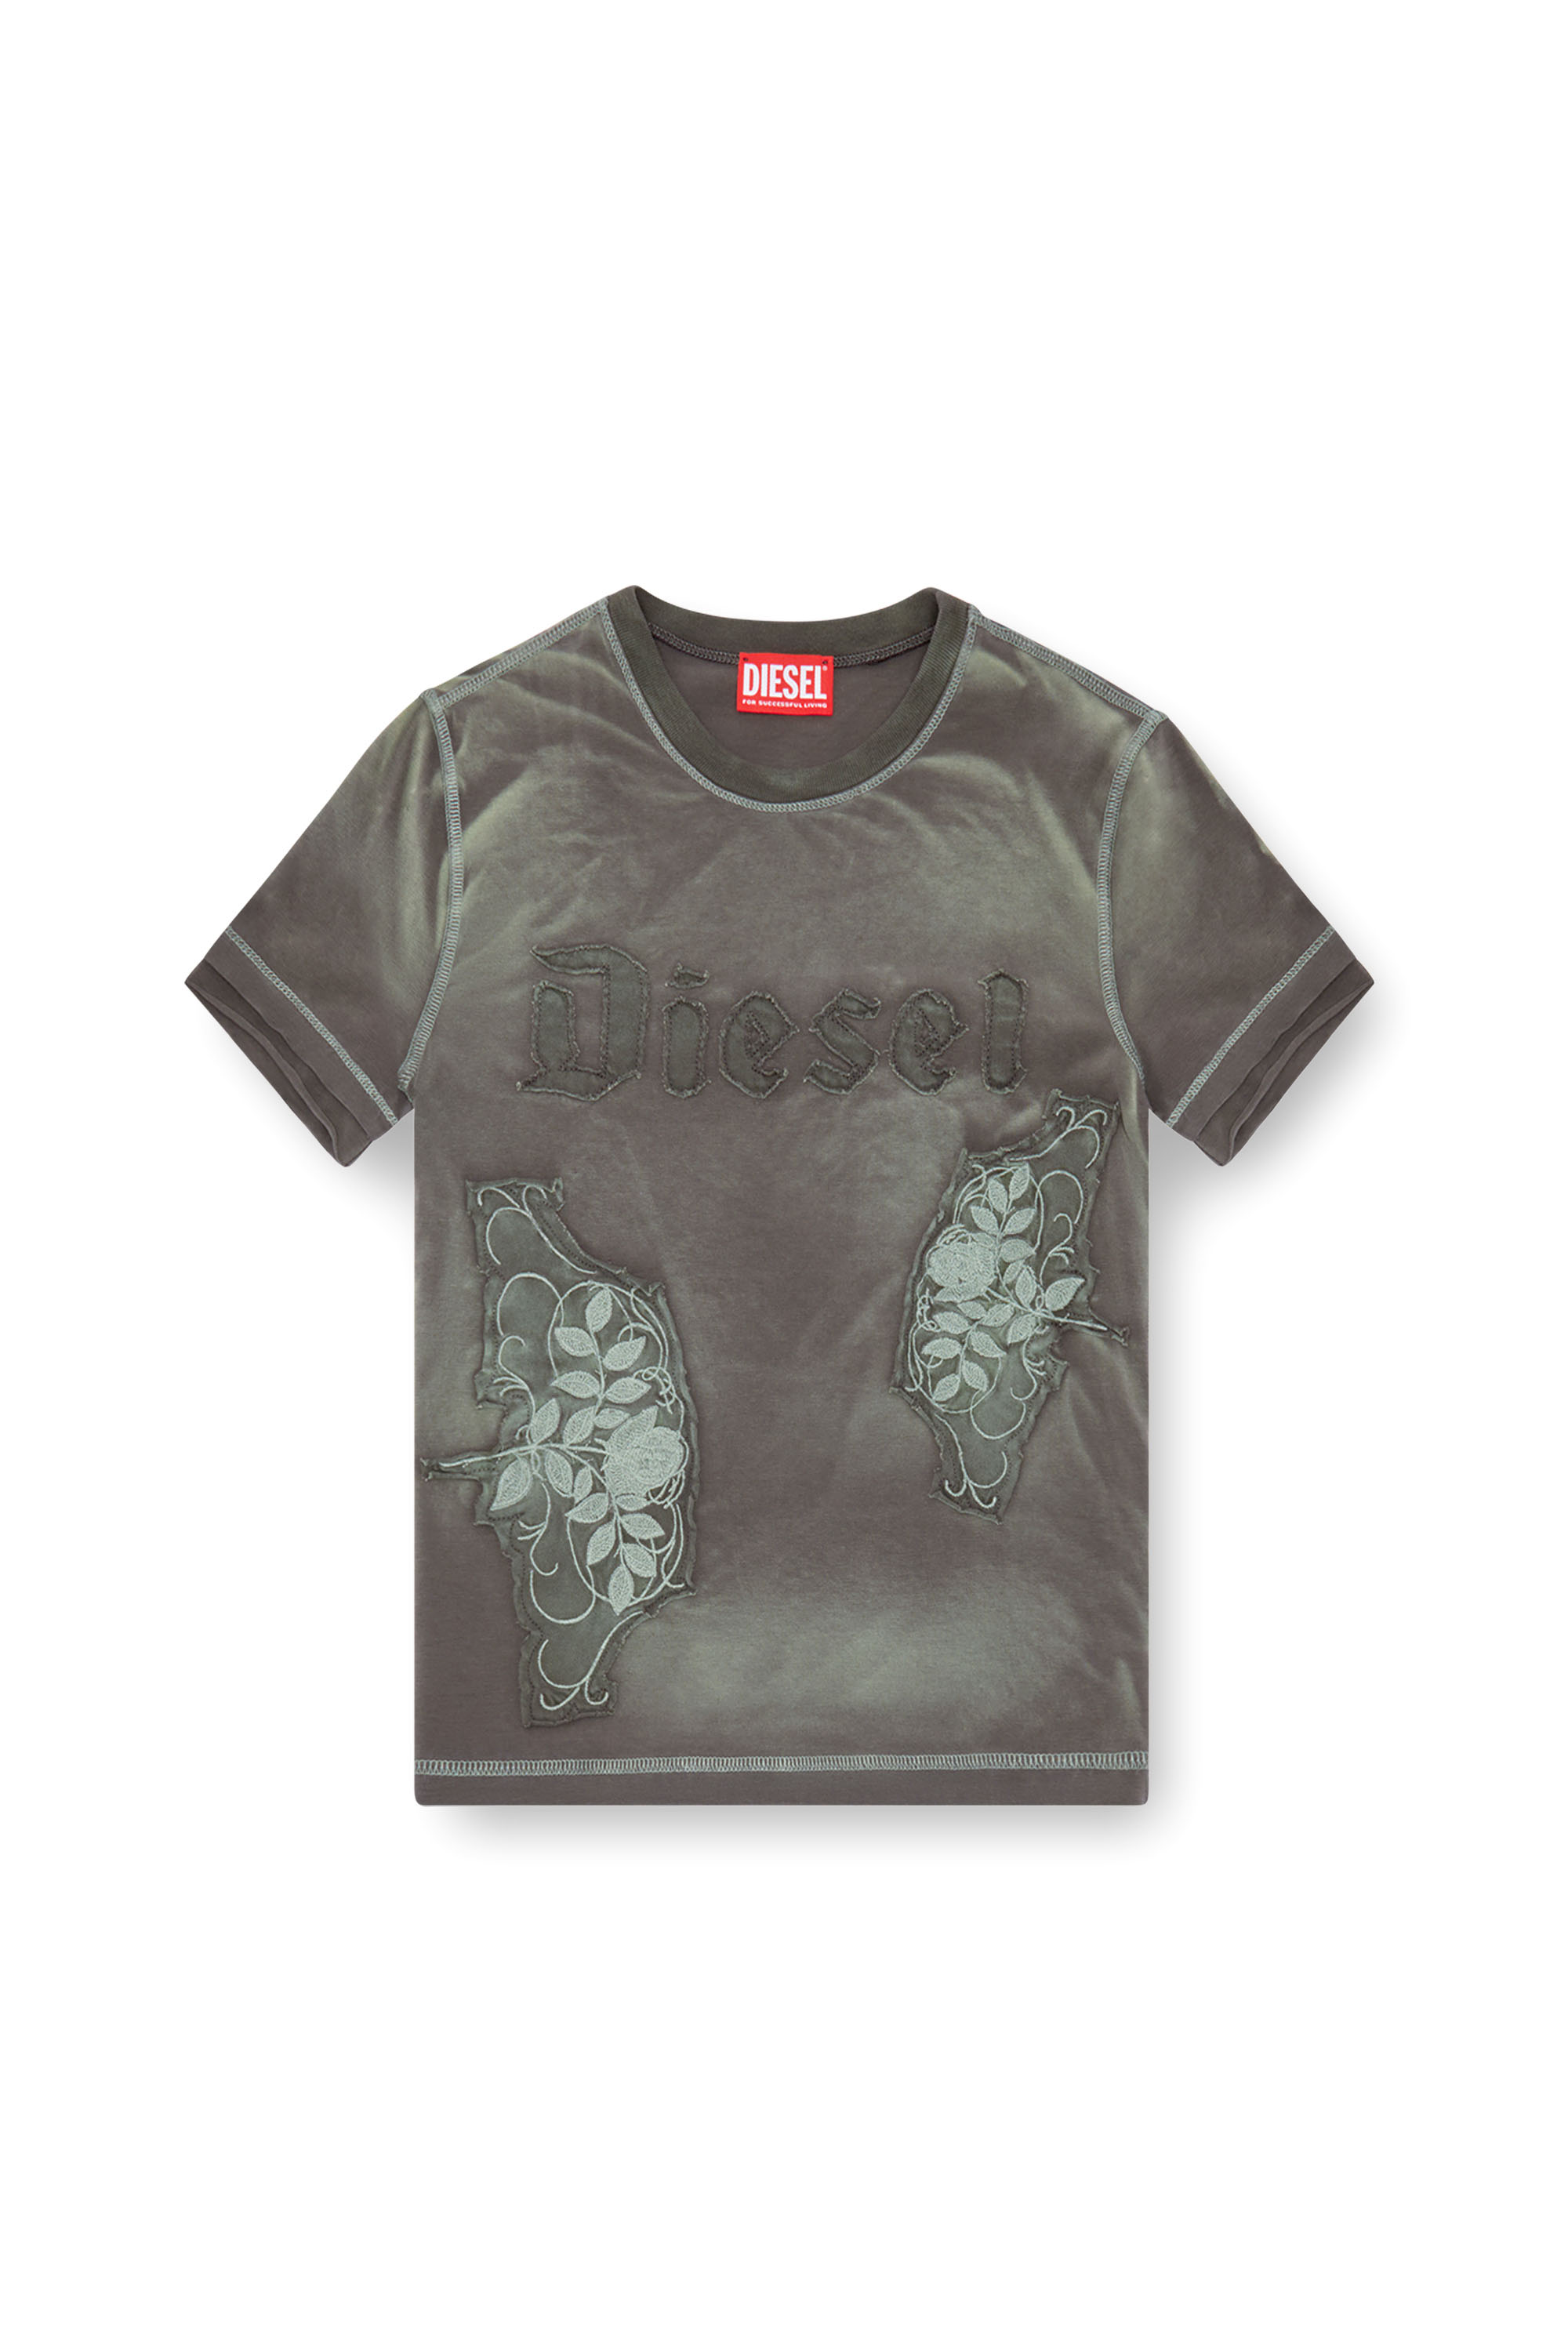 Diesel - T-UNCUT, Donna T-shirt con patch floreali ricamati in Viola - Image 3